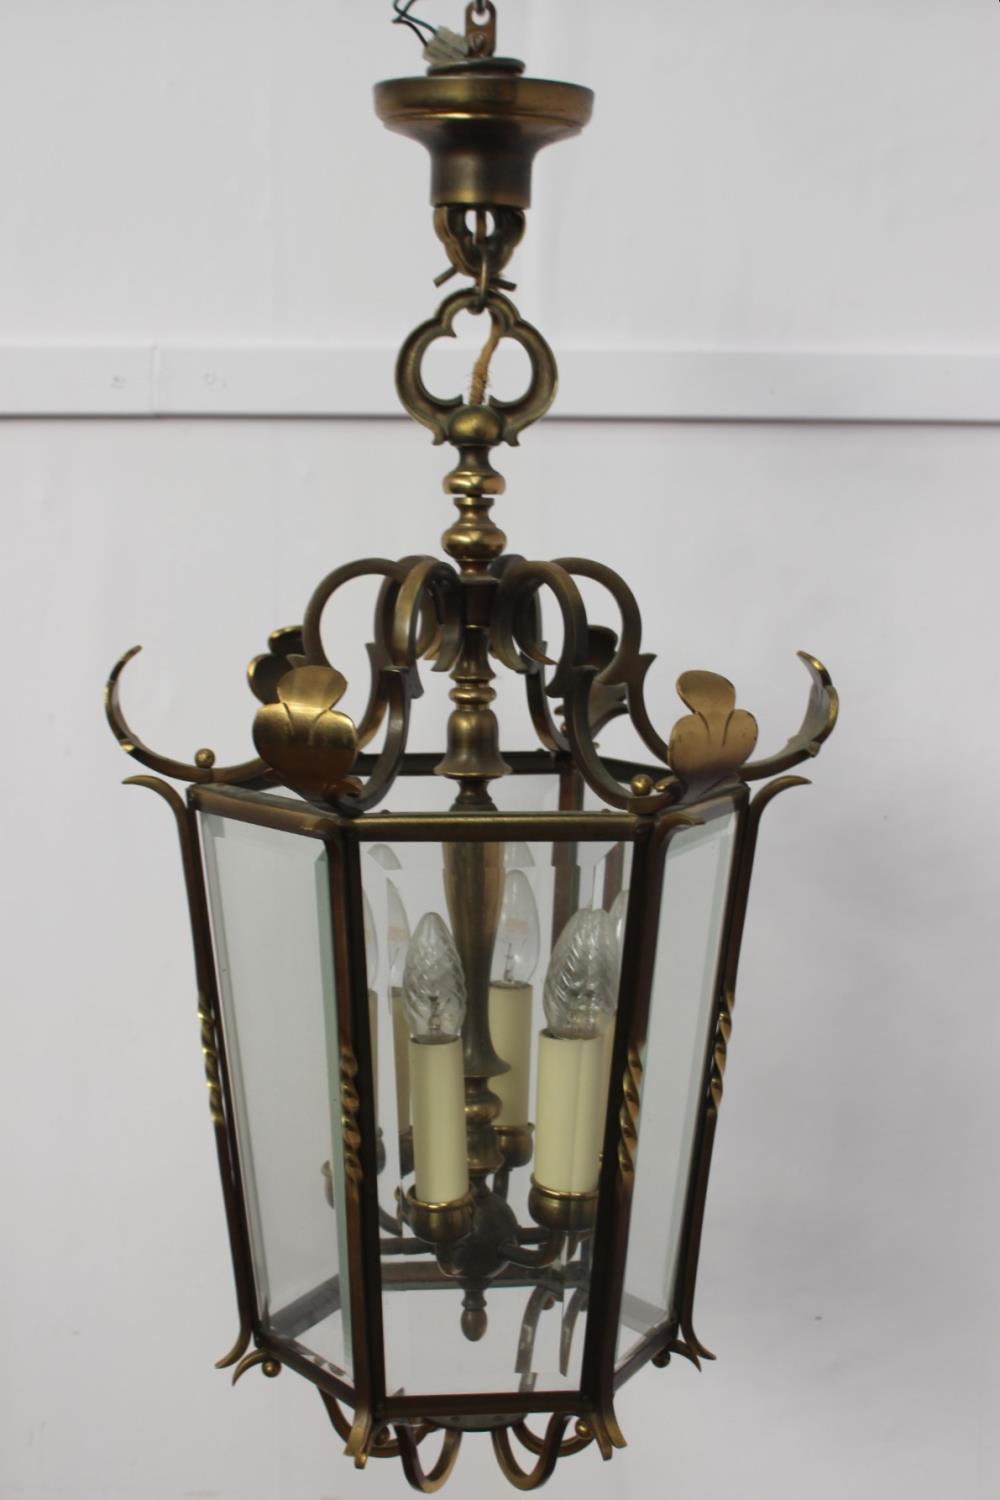 Decorative brass and glass hexagonal hall lantern { 78cm H X 30cm Dia }